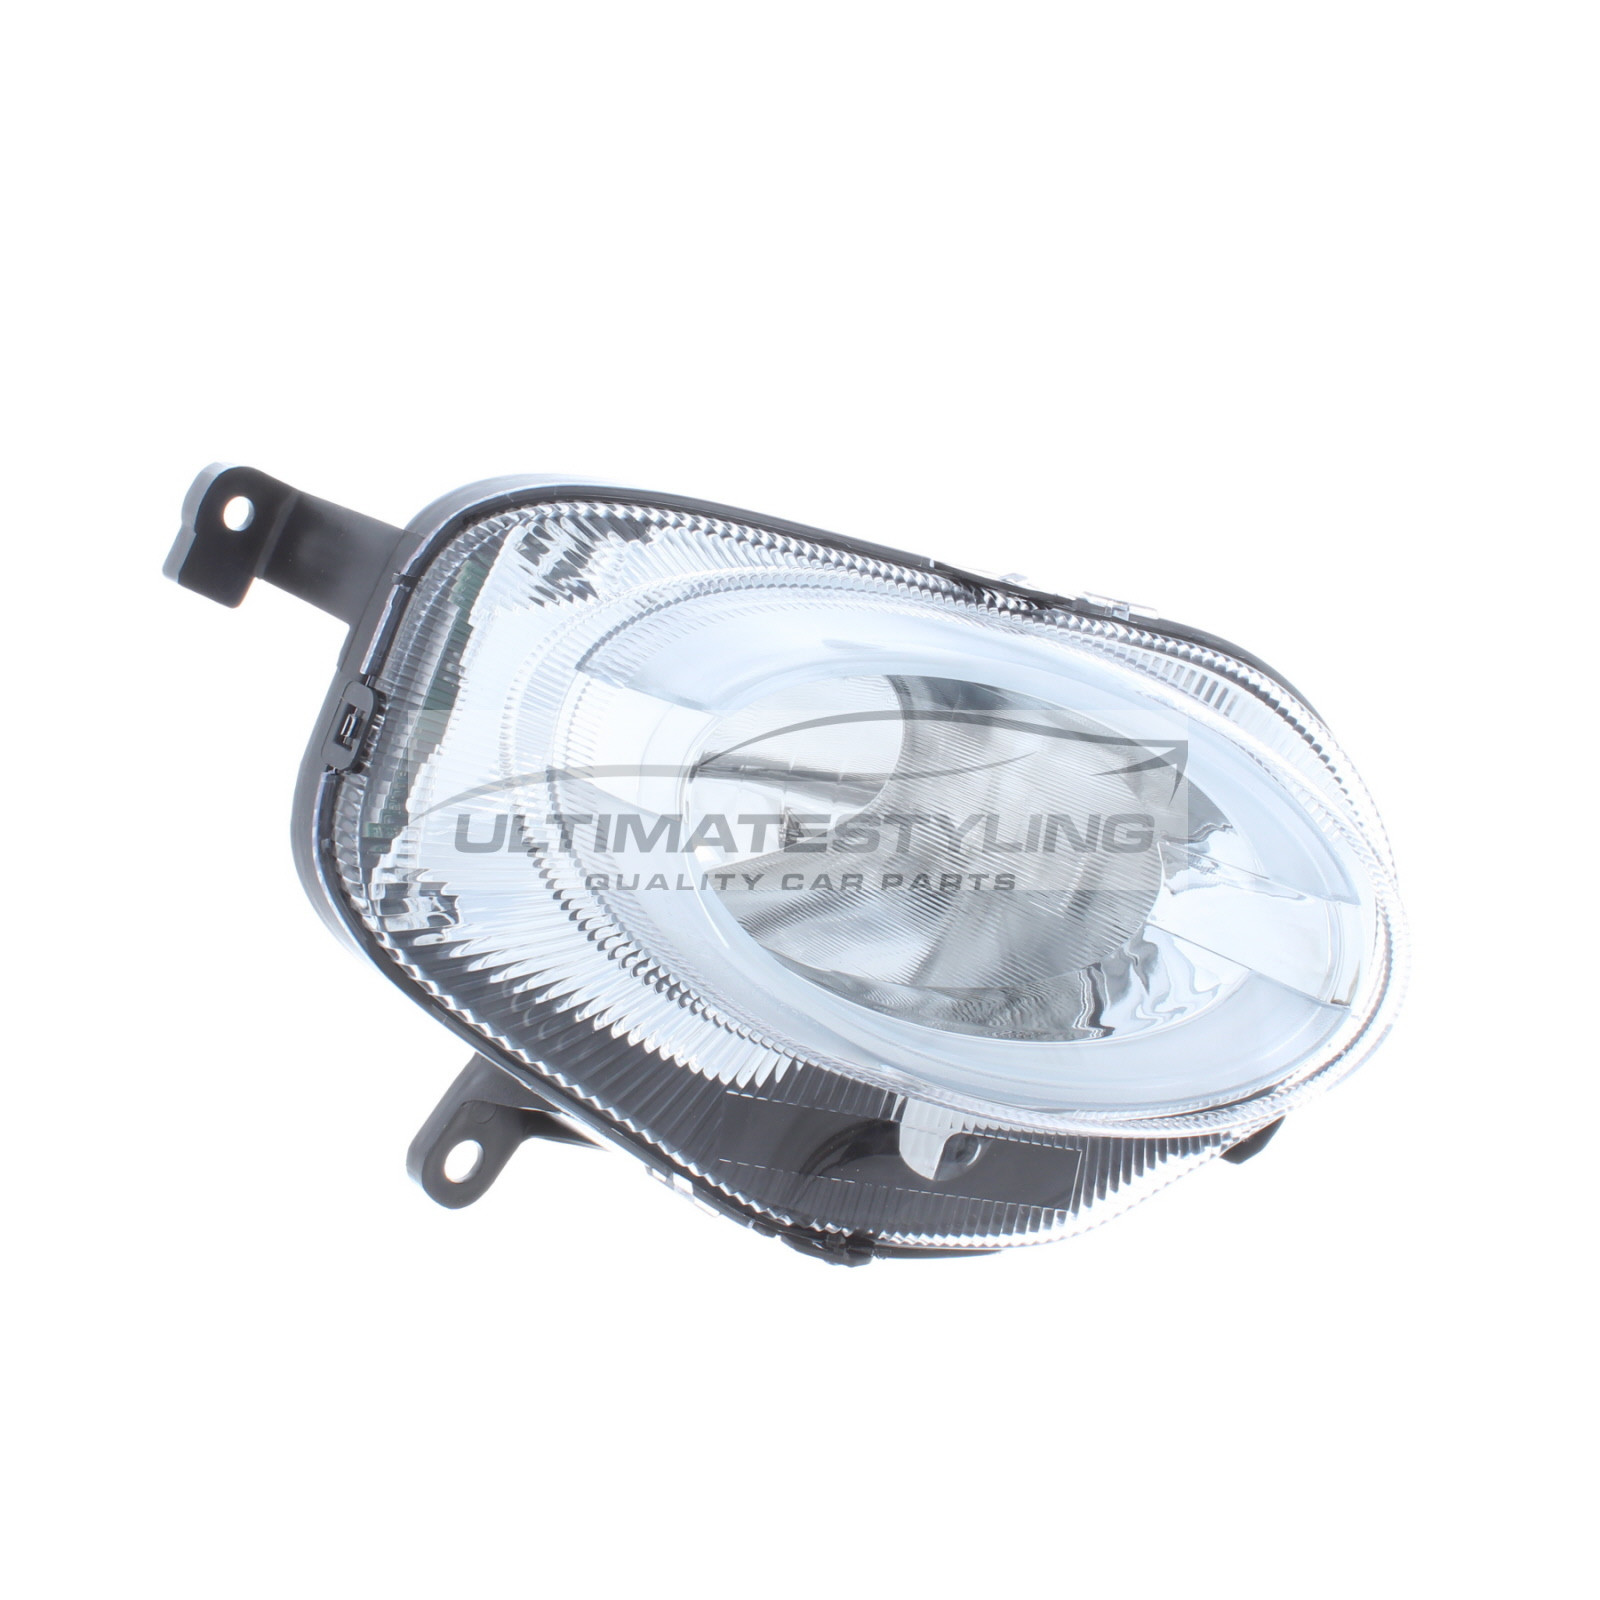 Headlight / Headlamp for Abarth 695